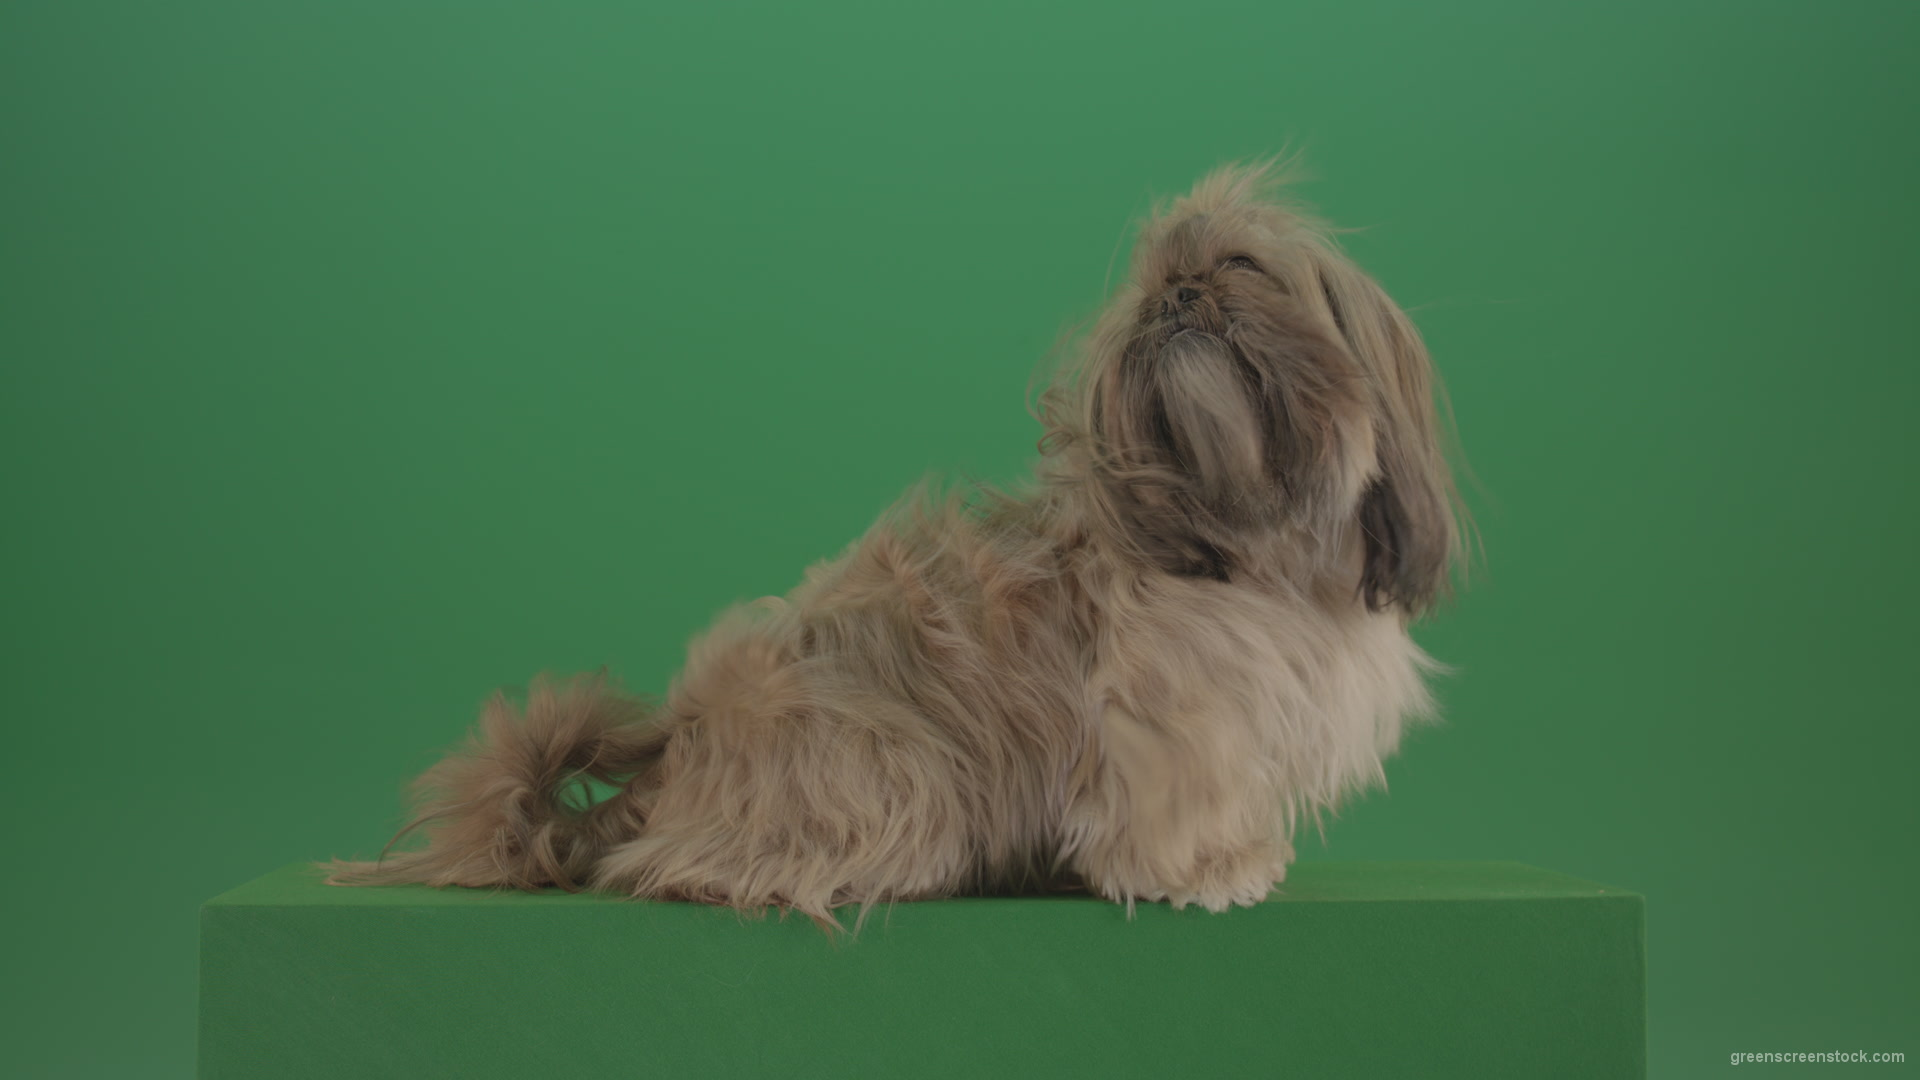 Greeen-Screen-Dog-Shih-Tzu-Small-puppy-in-winter-storm-isolated-on-green-screen_004 Green Screen Stock